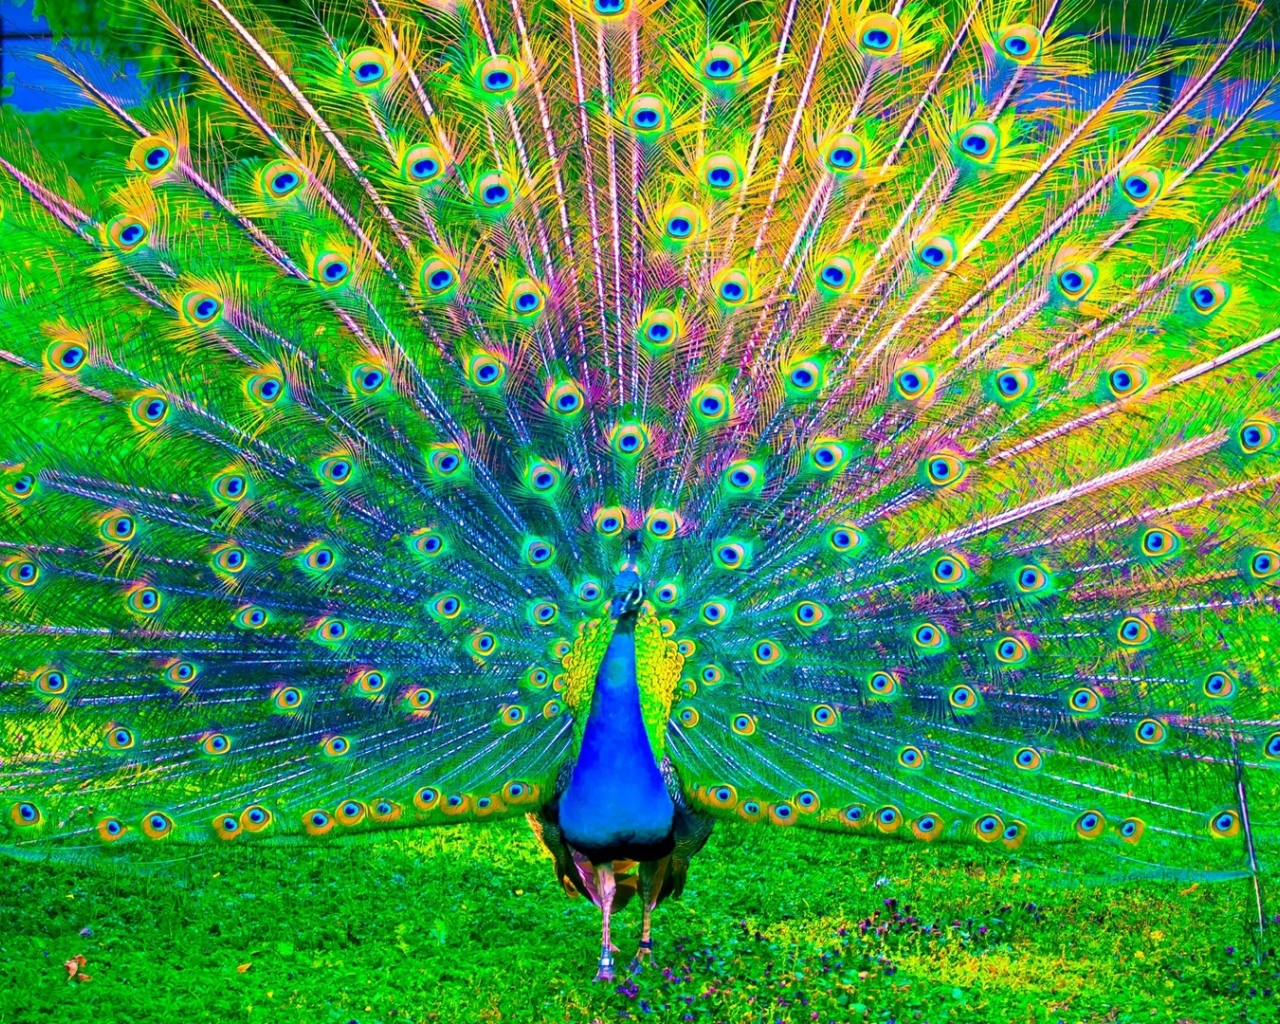 Download 1280x1024 Wallpaper Peacock, Peafowl Colorful Bird Dance, Standard  5:4, Fullscreen, 1280x1024 Hd Image, Background, 6313